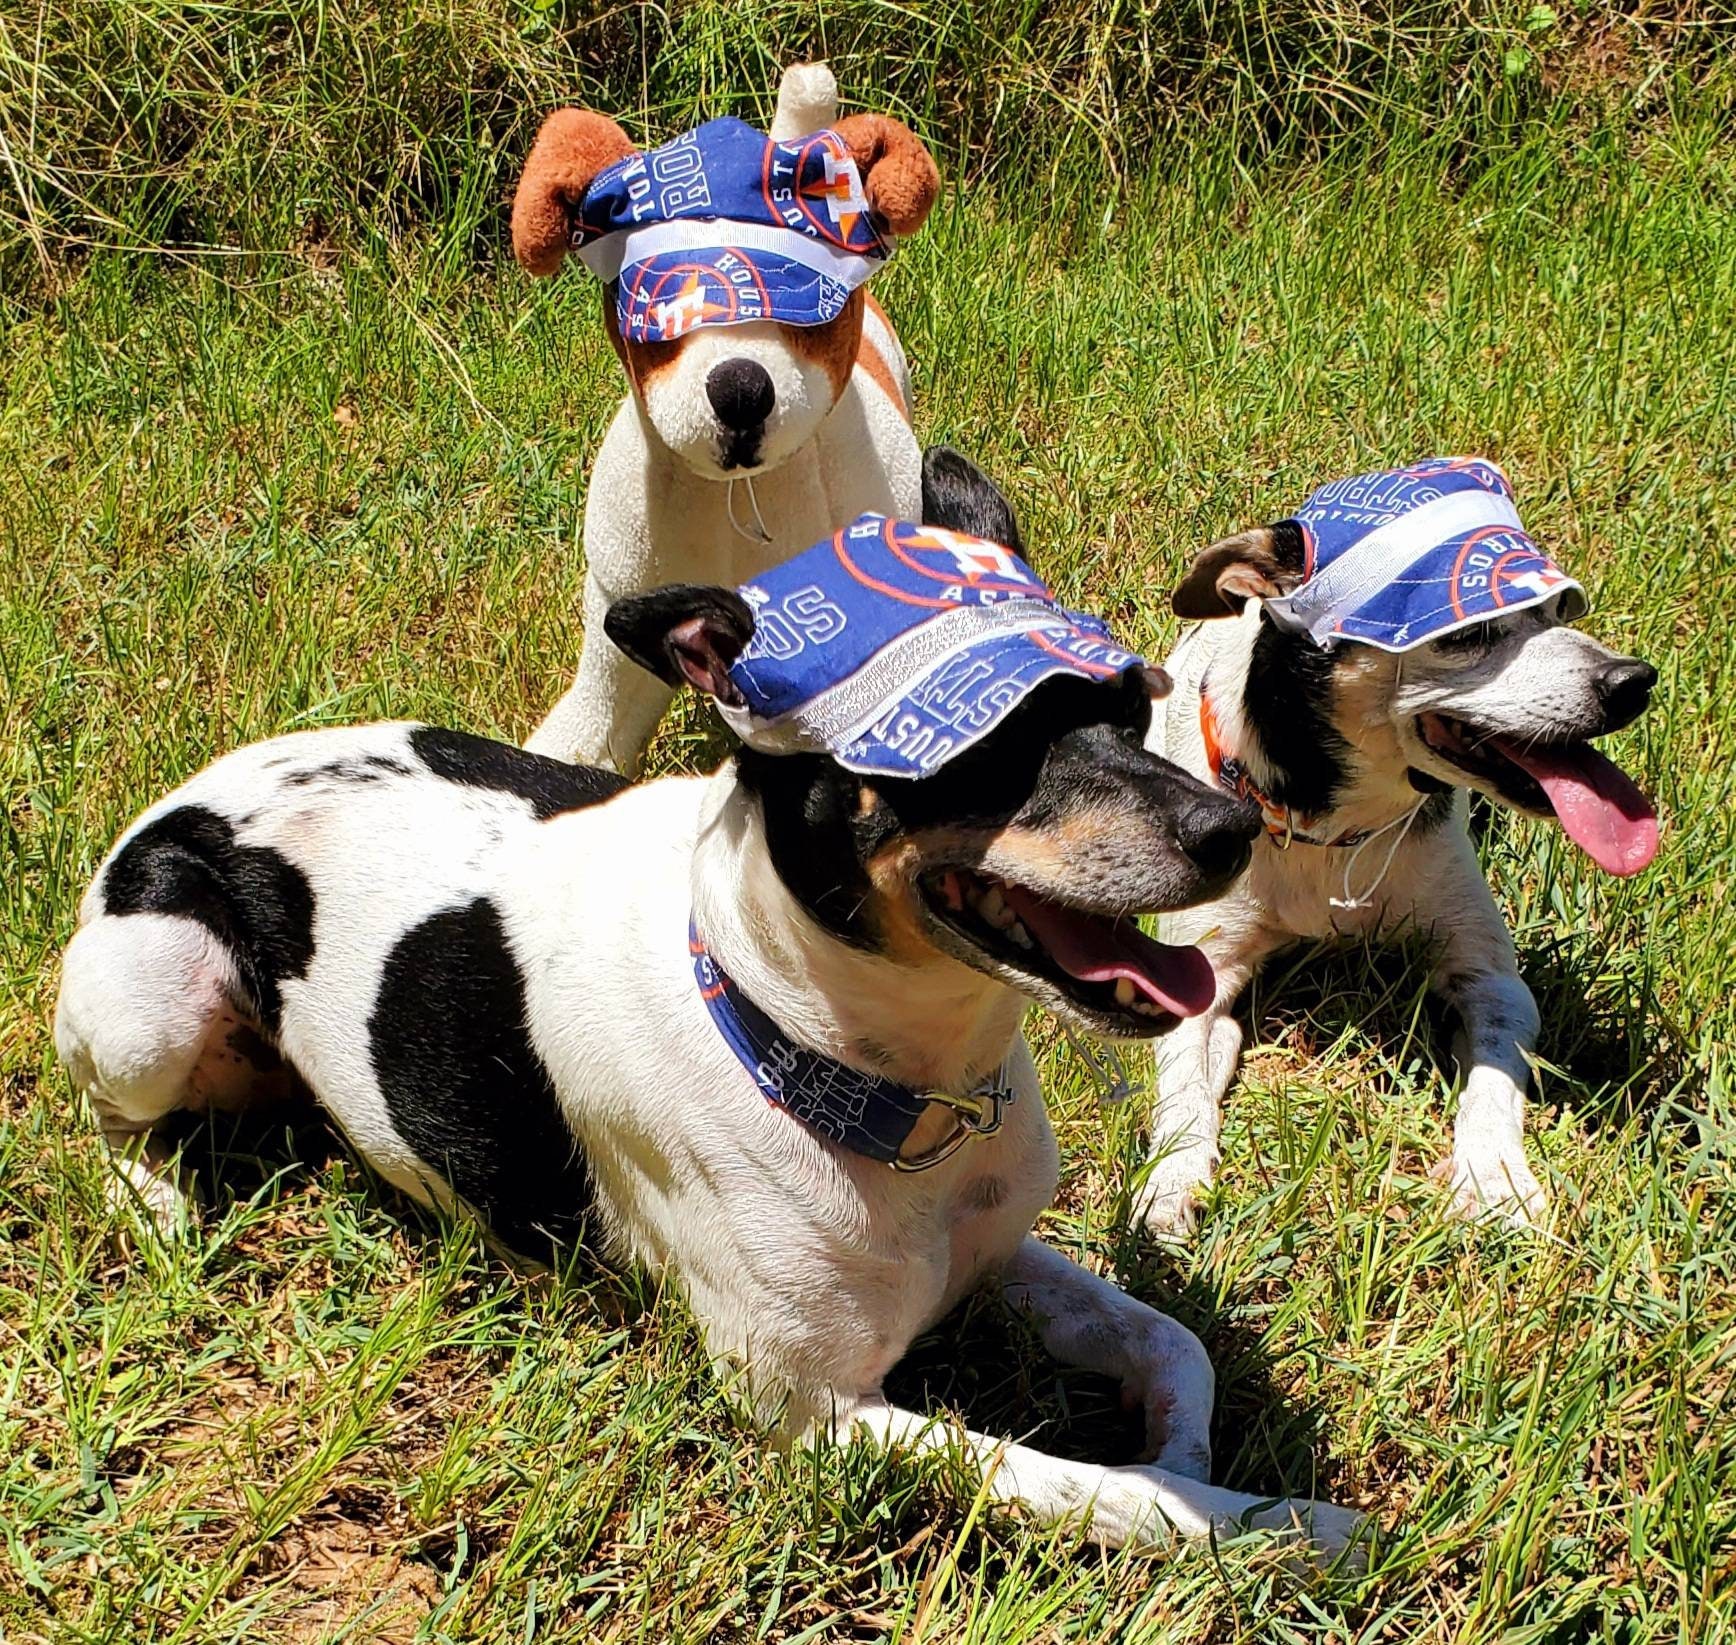 Houston Astro Pet Hat Astros Dog Hat Astros Cat Hat Astros 